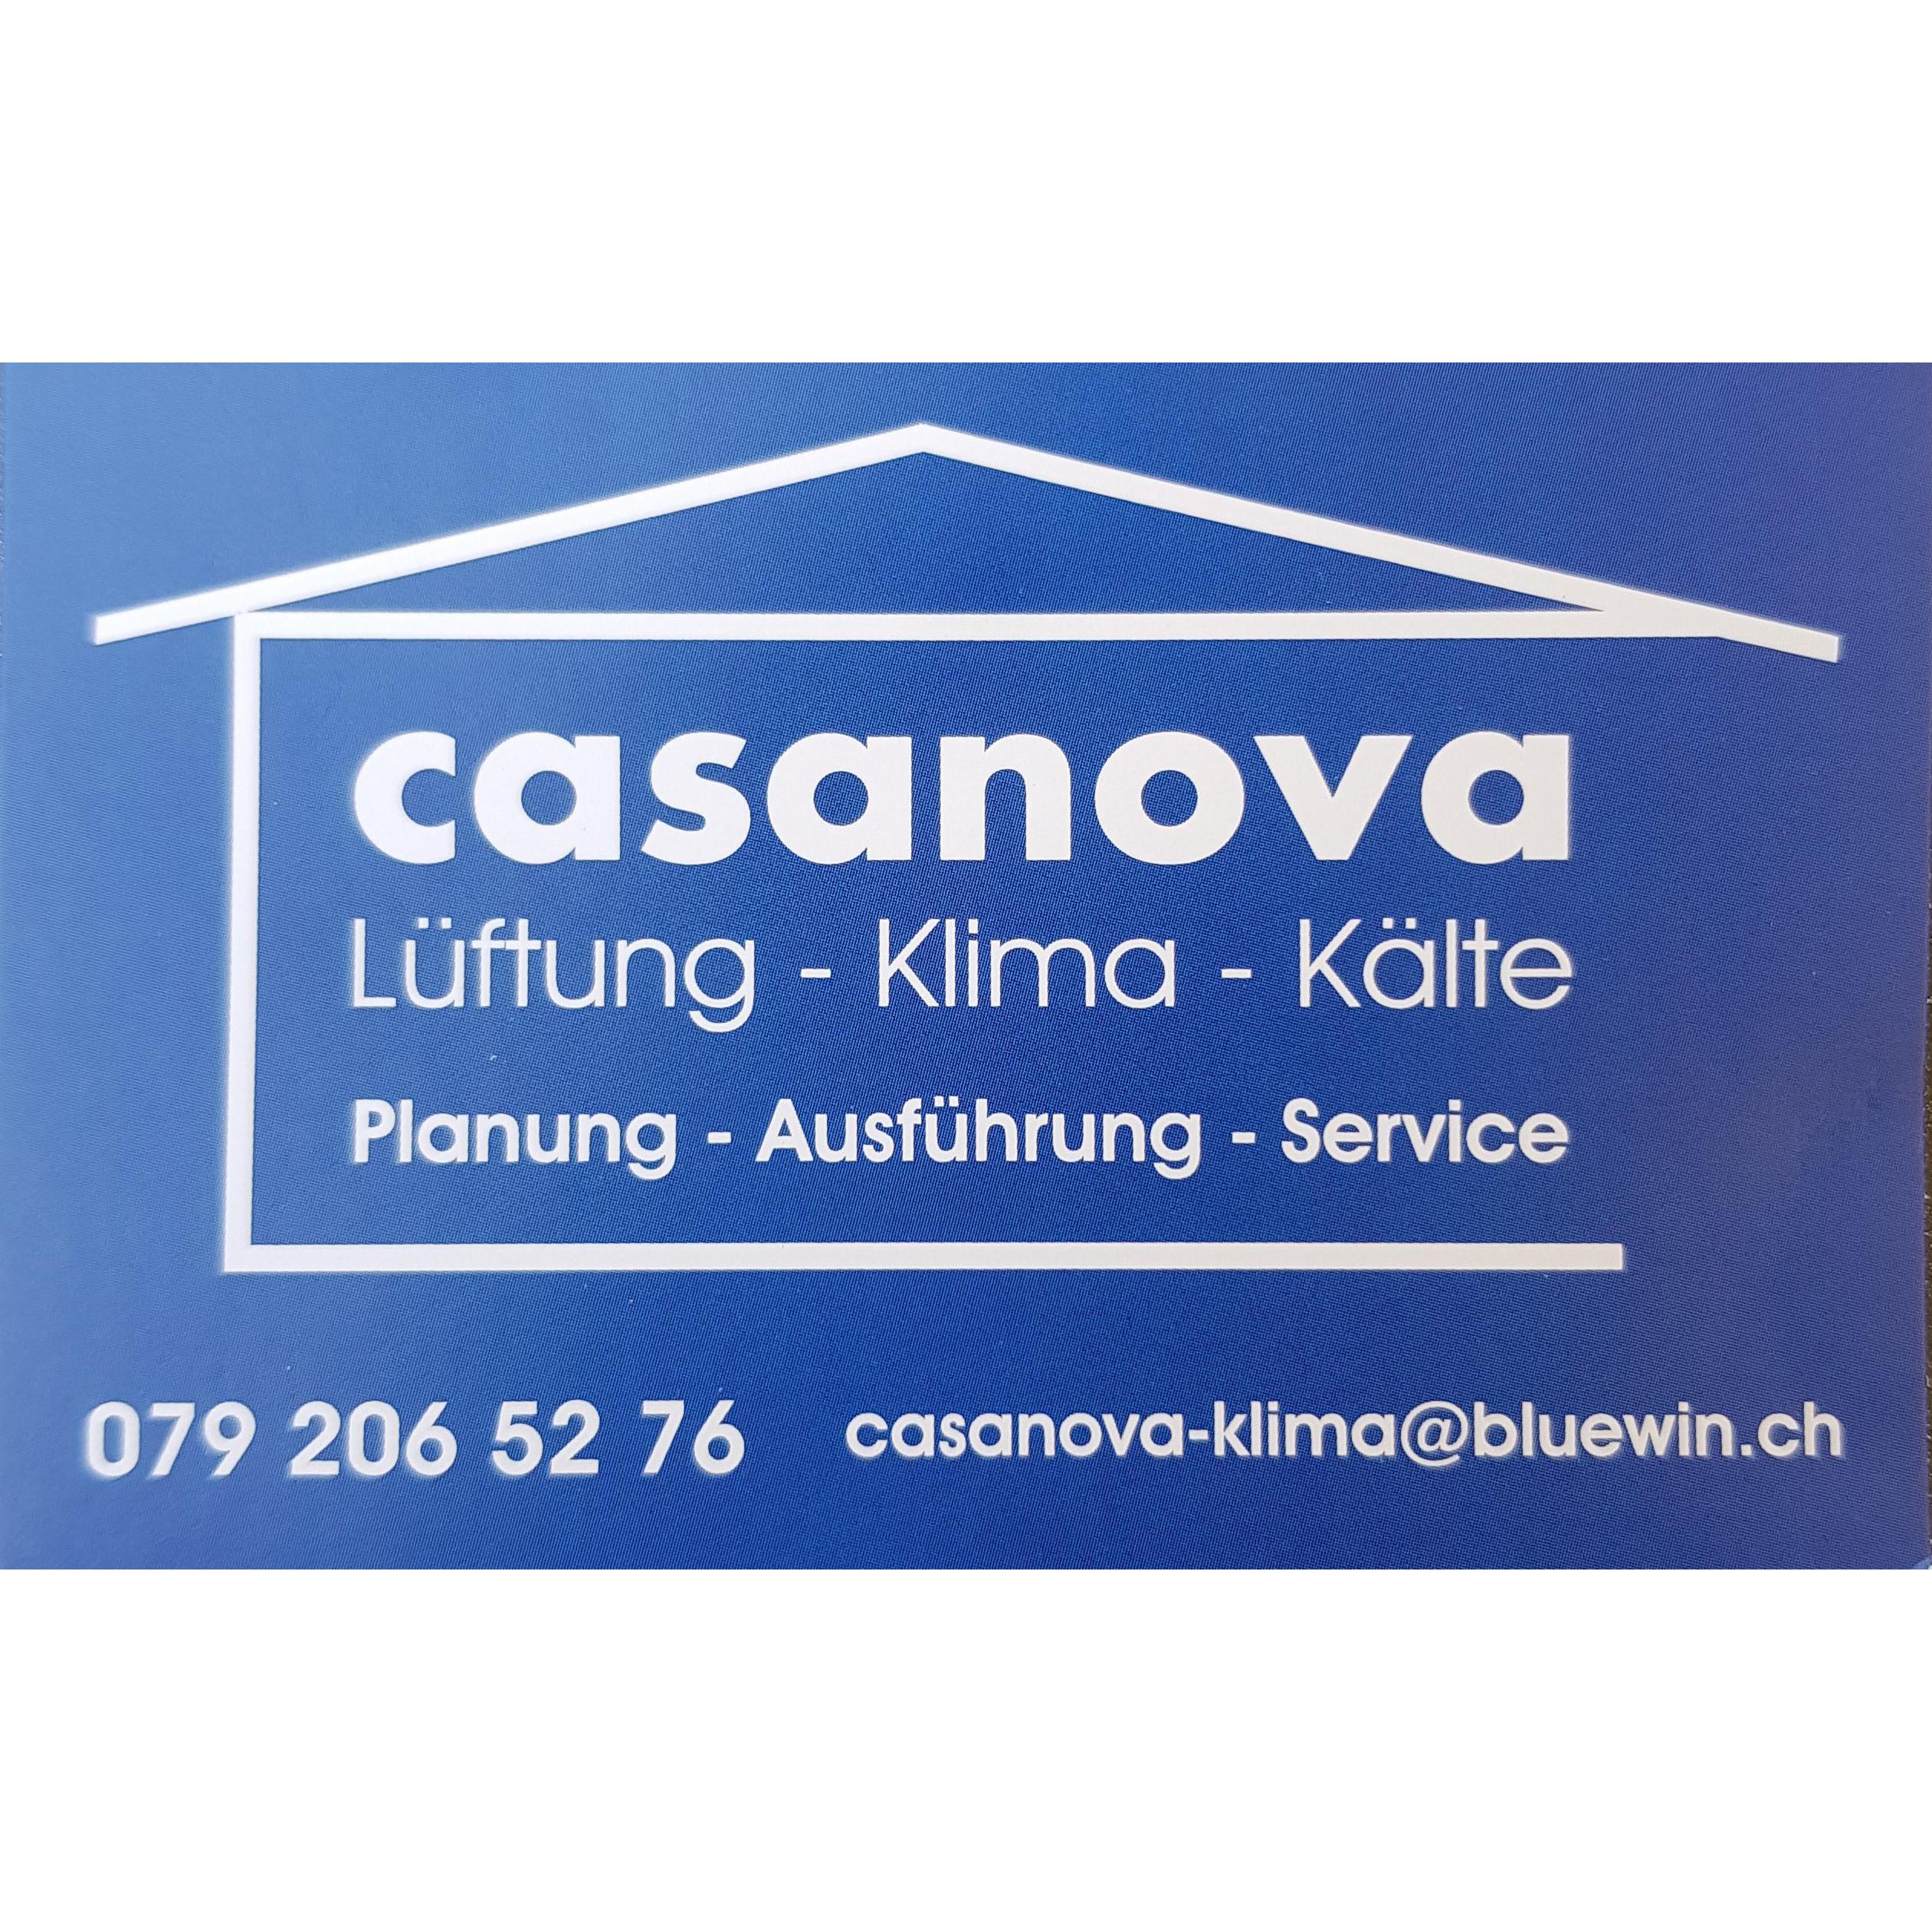 Casanova Lüftung Klima Kälte Logo